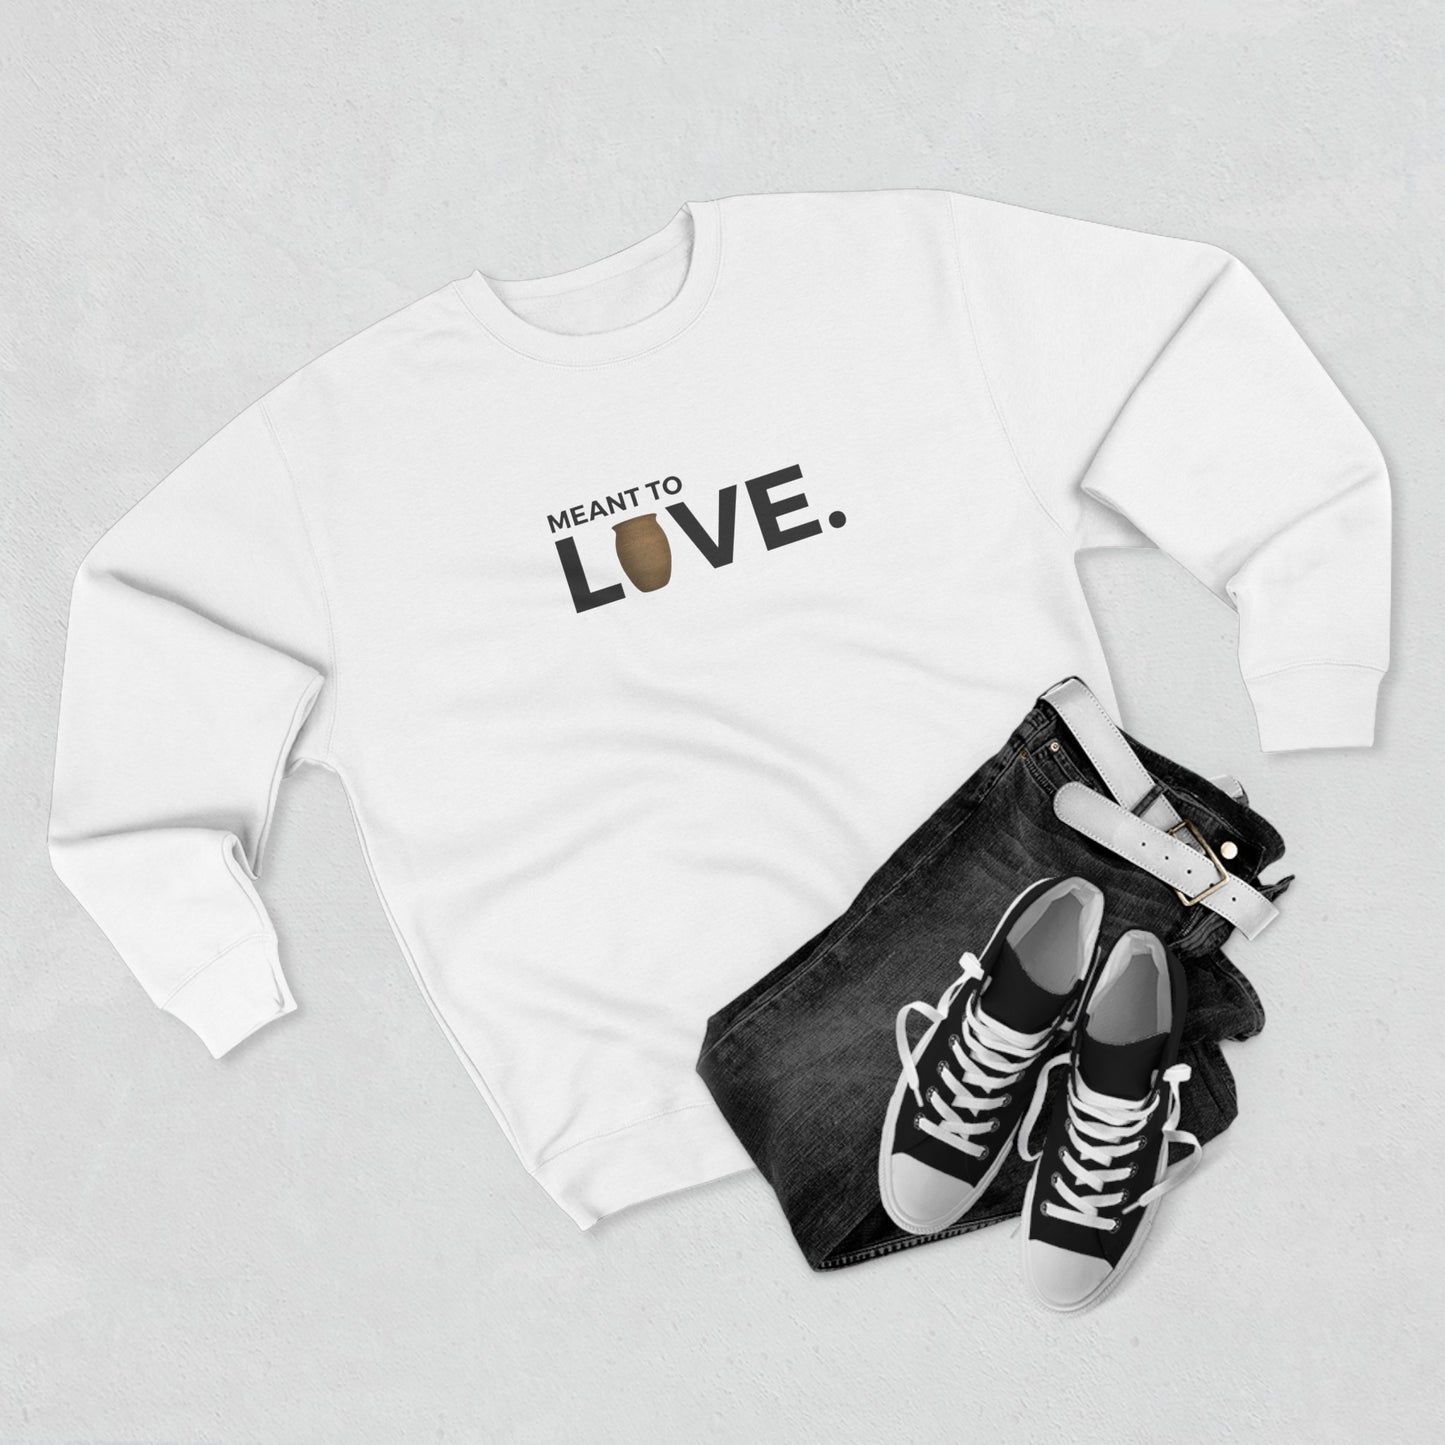 The Chosen Inspired - Made to Love Unisex Crewneck Sweatshirt | Heather Gray and White |